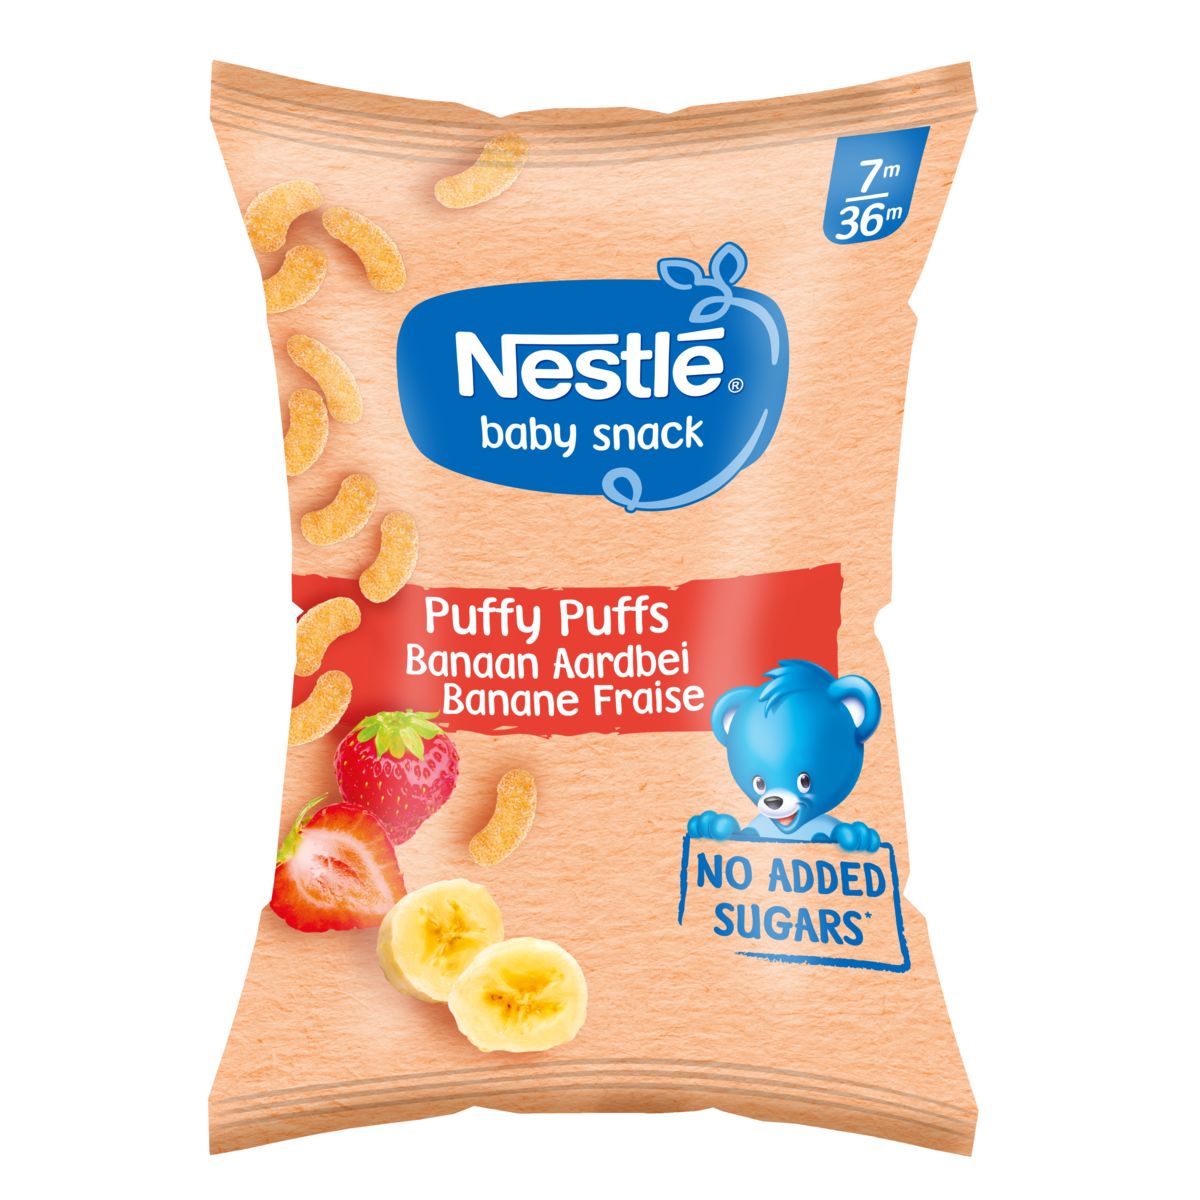 Nestlé Baby Snack Puffy Puffs Banane Fraise dès 7mois (28g)